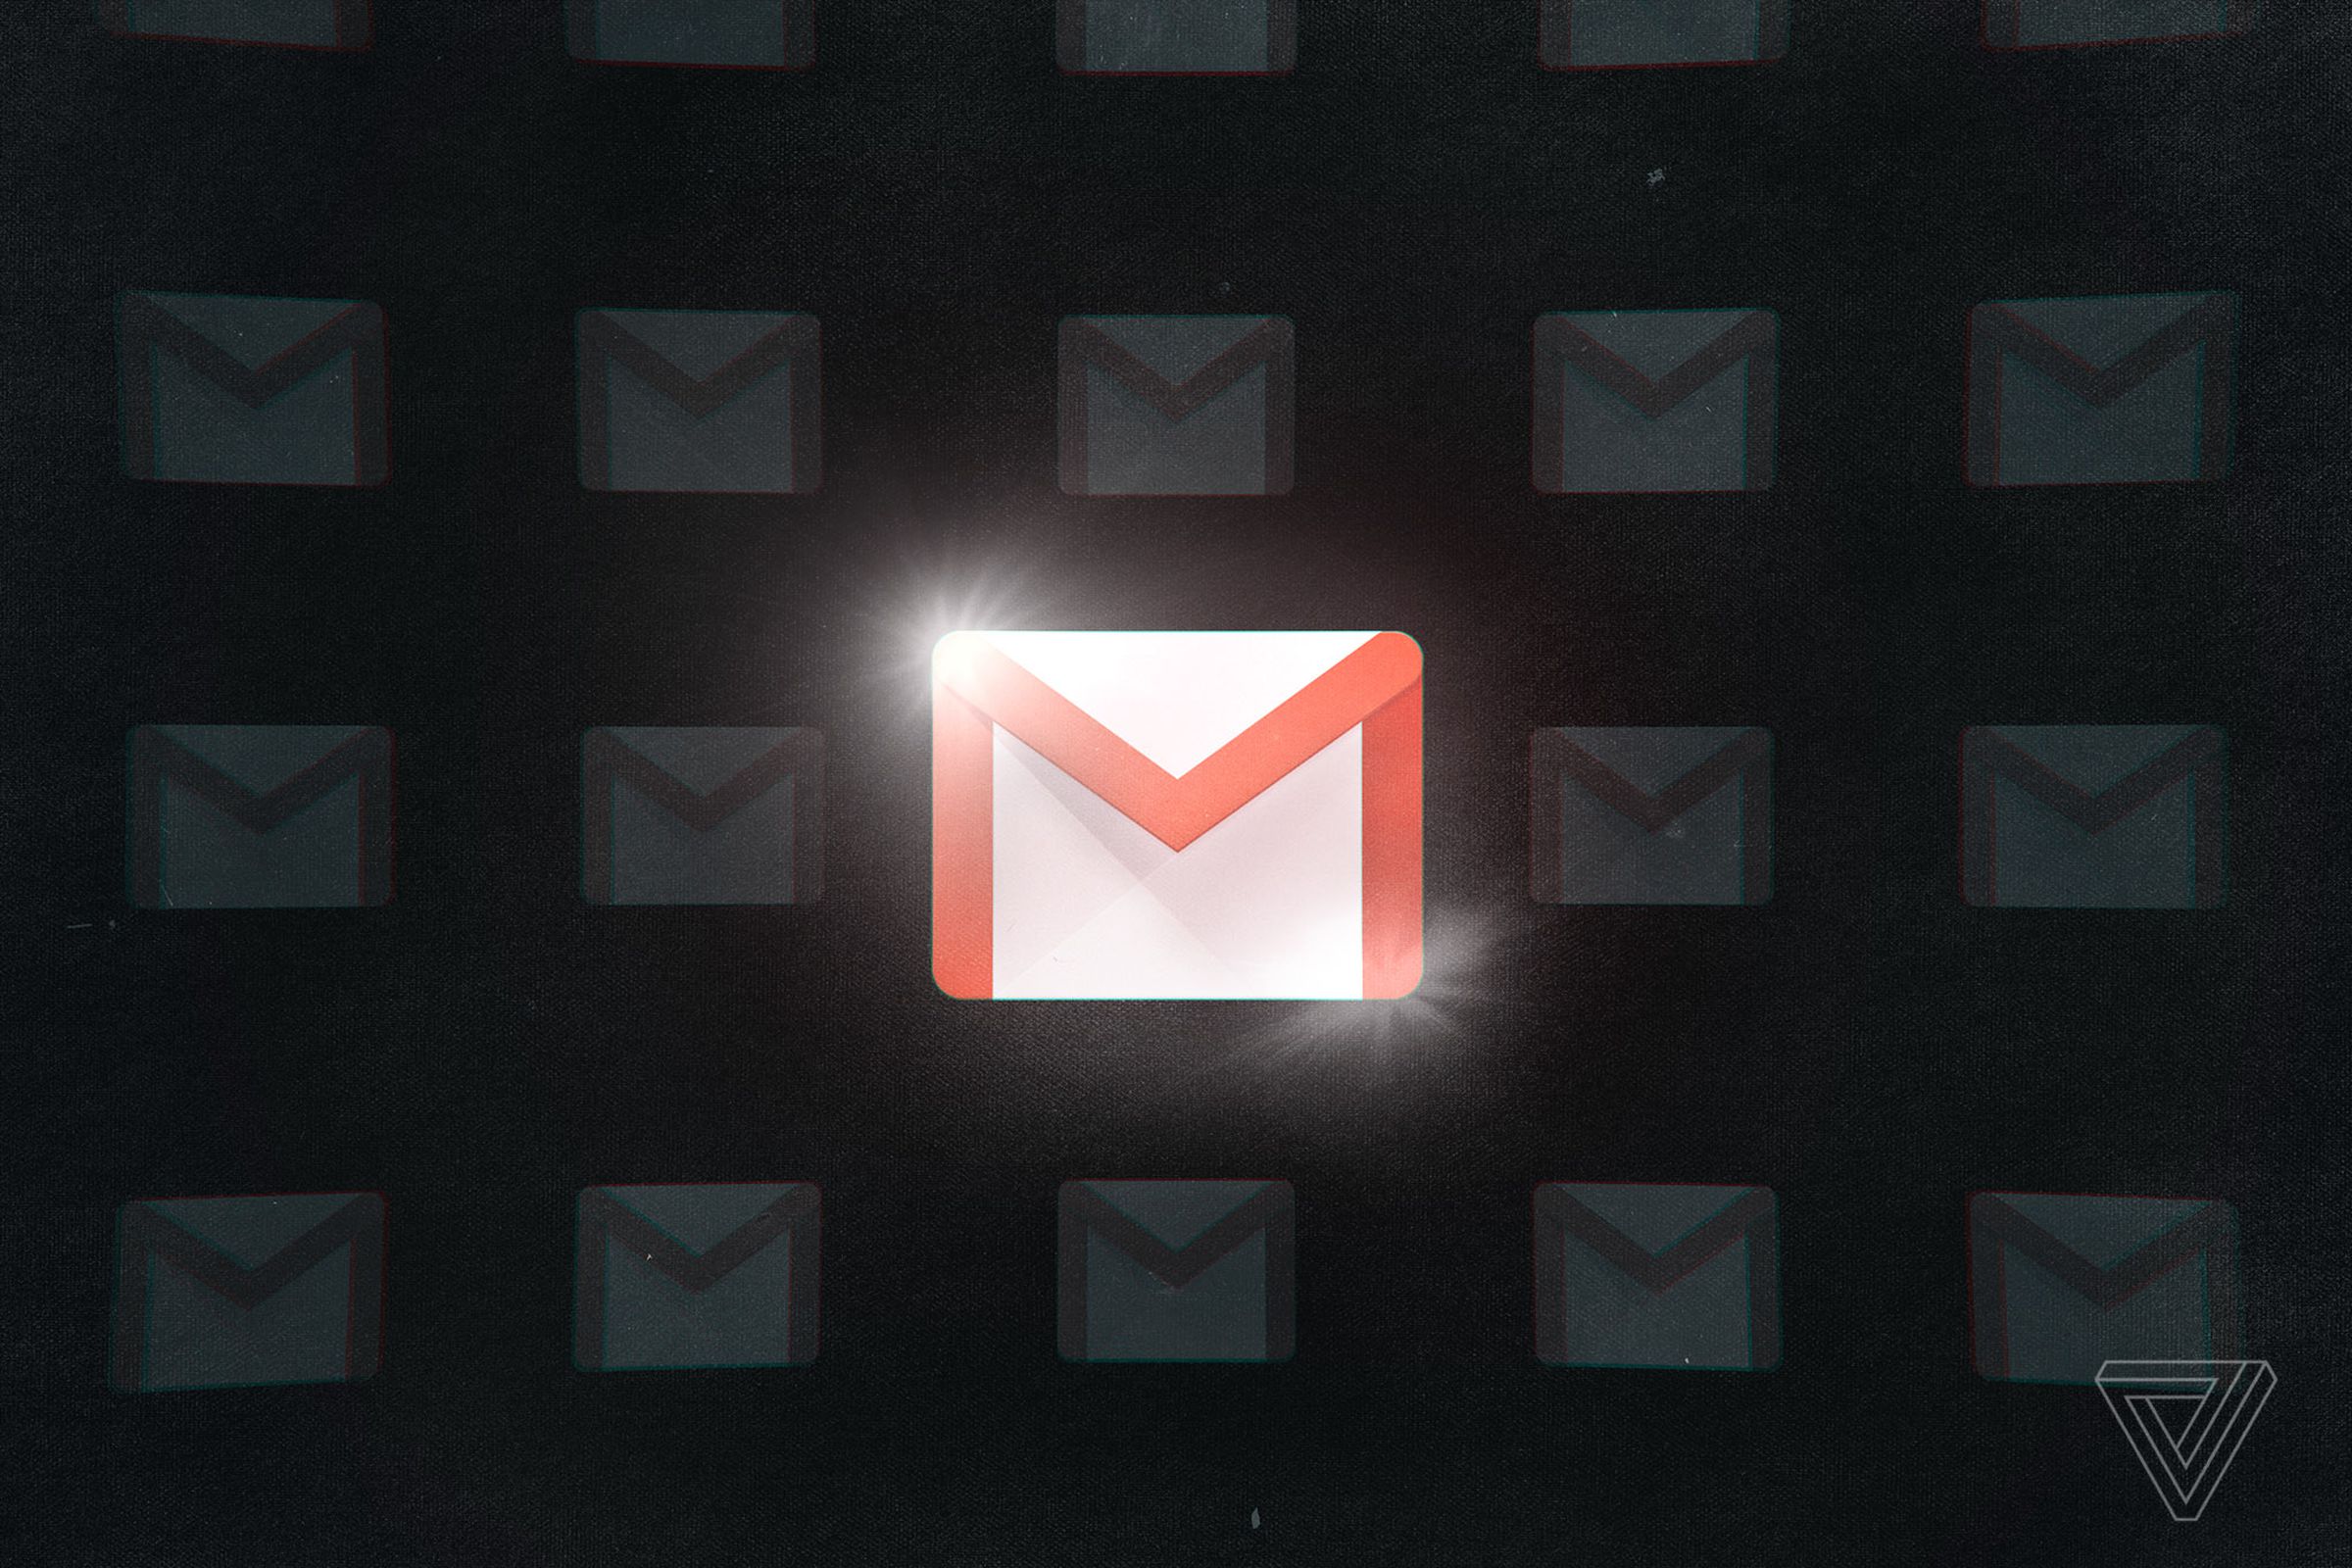 gmail travel folder